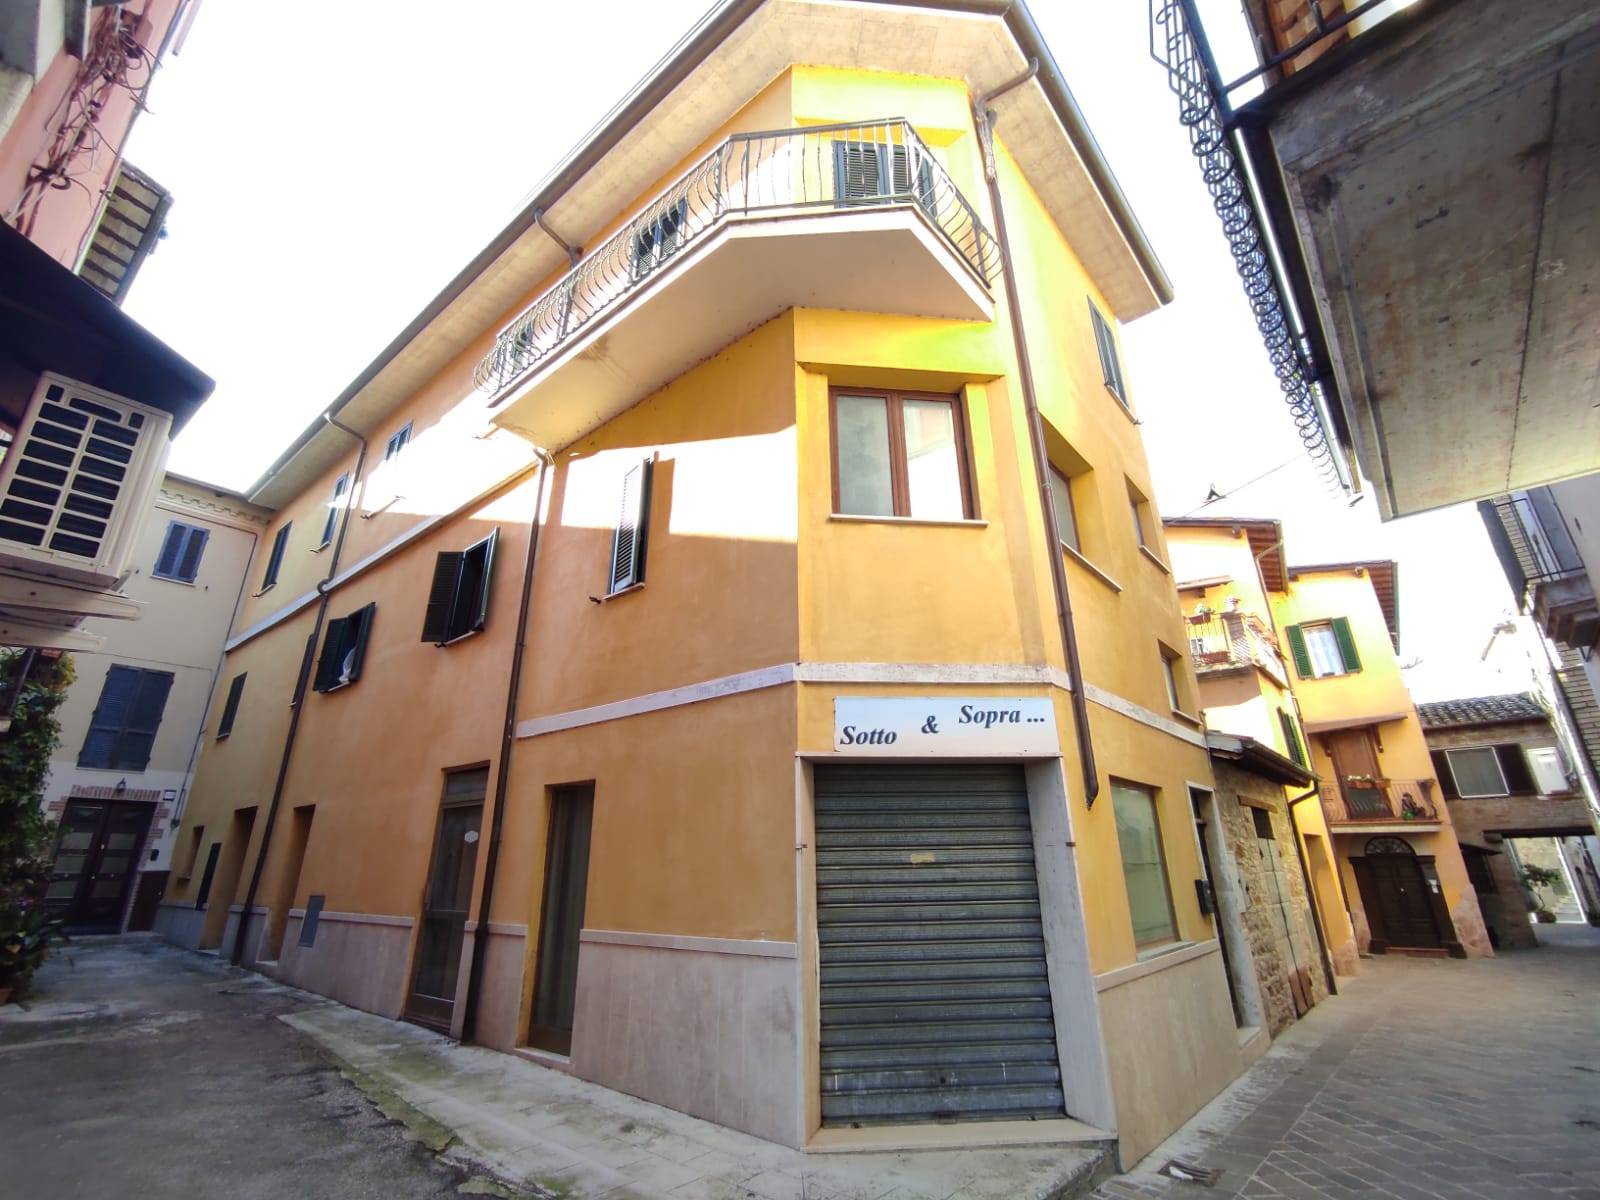 Villetta in vendita a Petrignano, Assisi (PG)